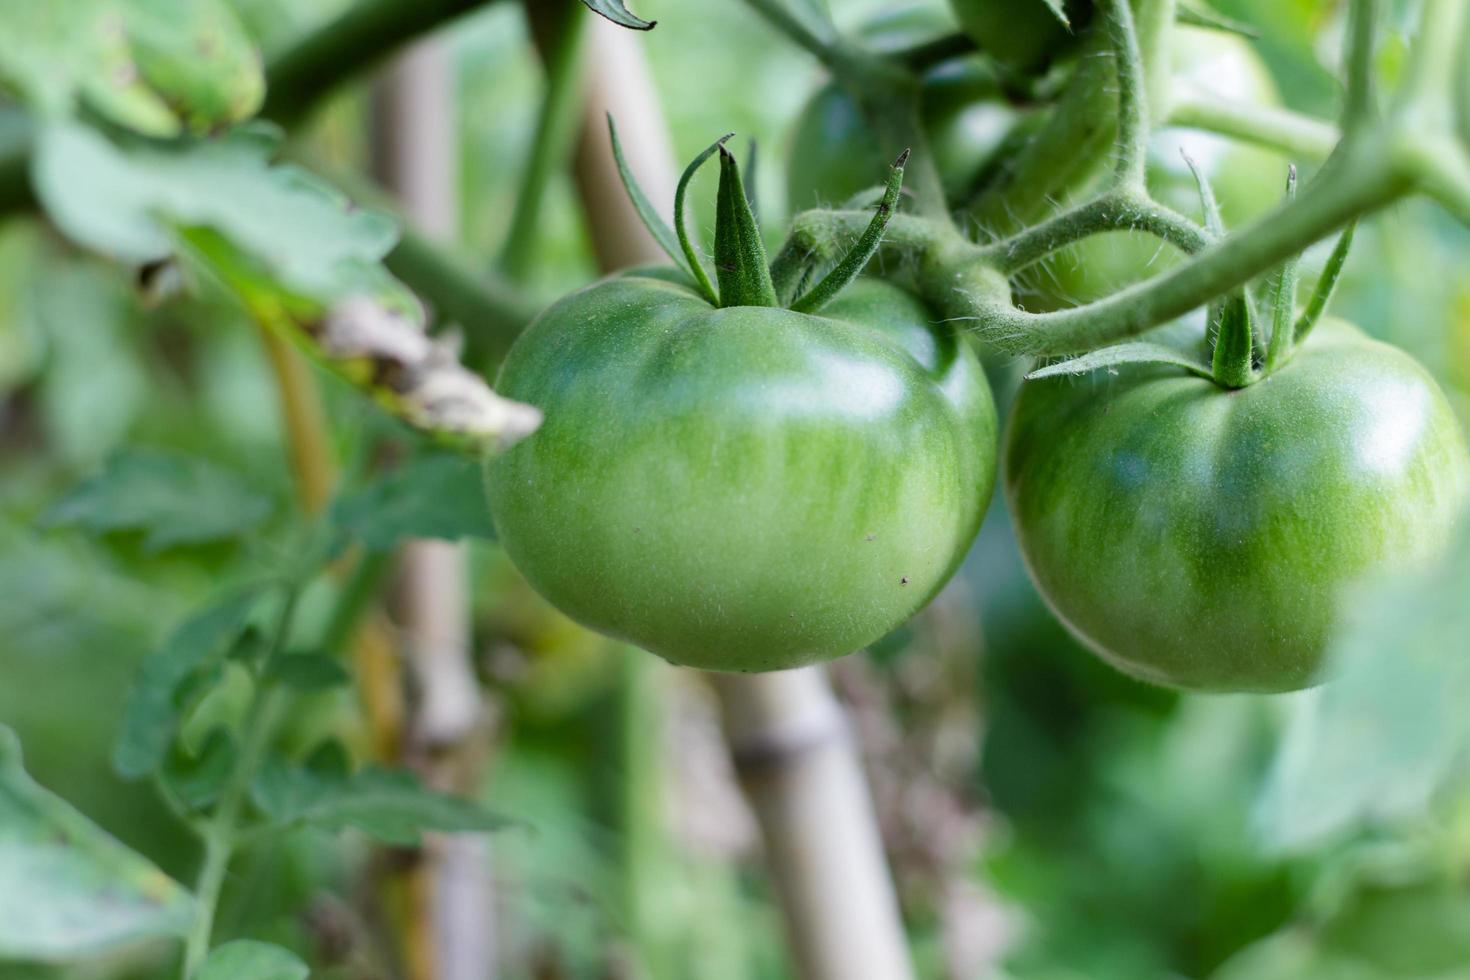 green tomatoes not yet ripe on organic garden plants photo